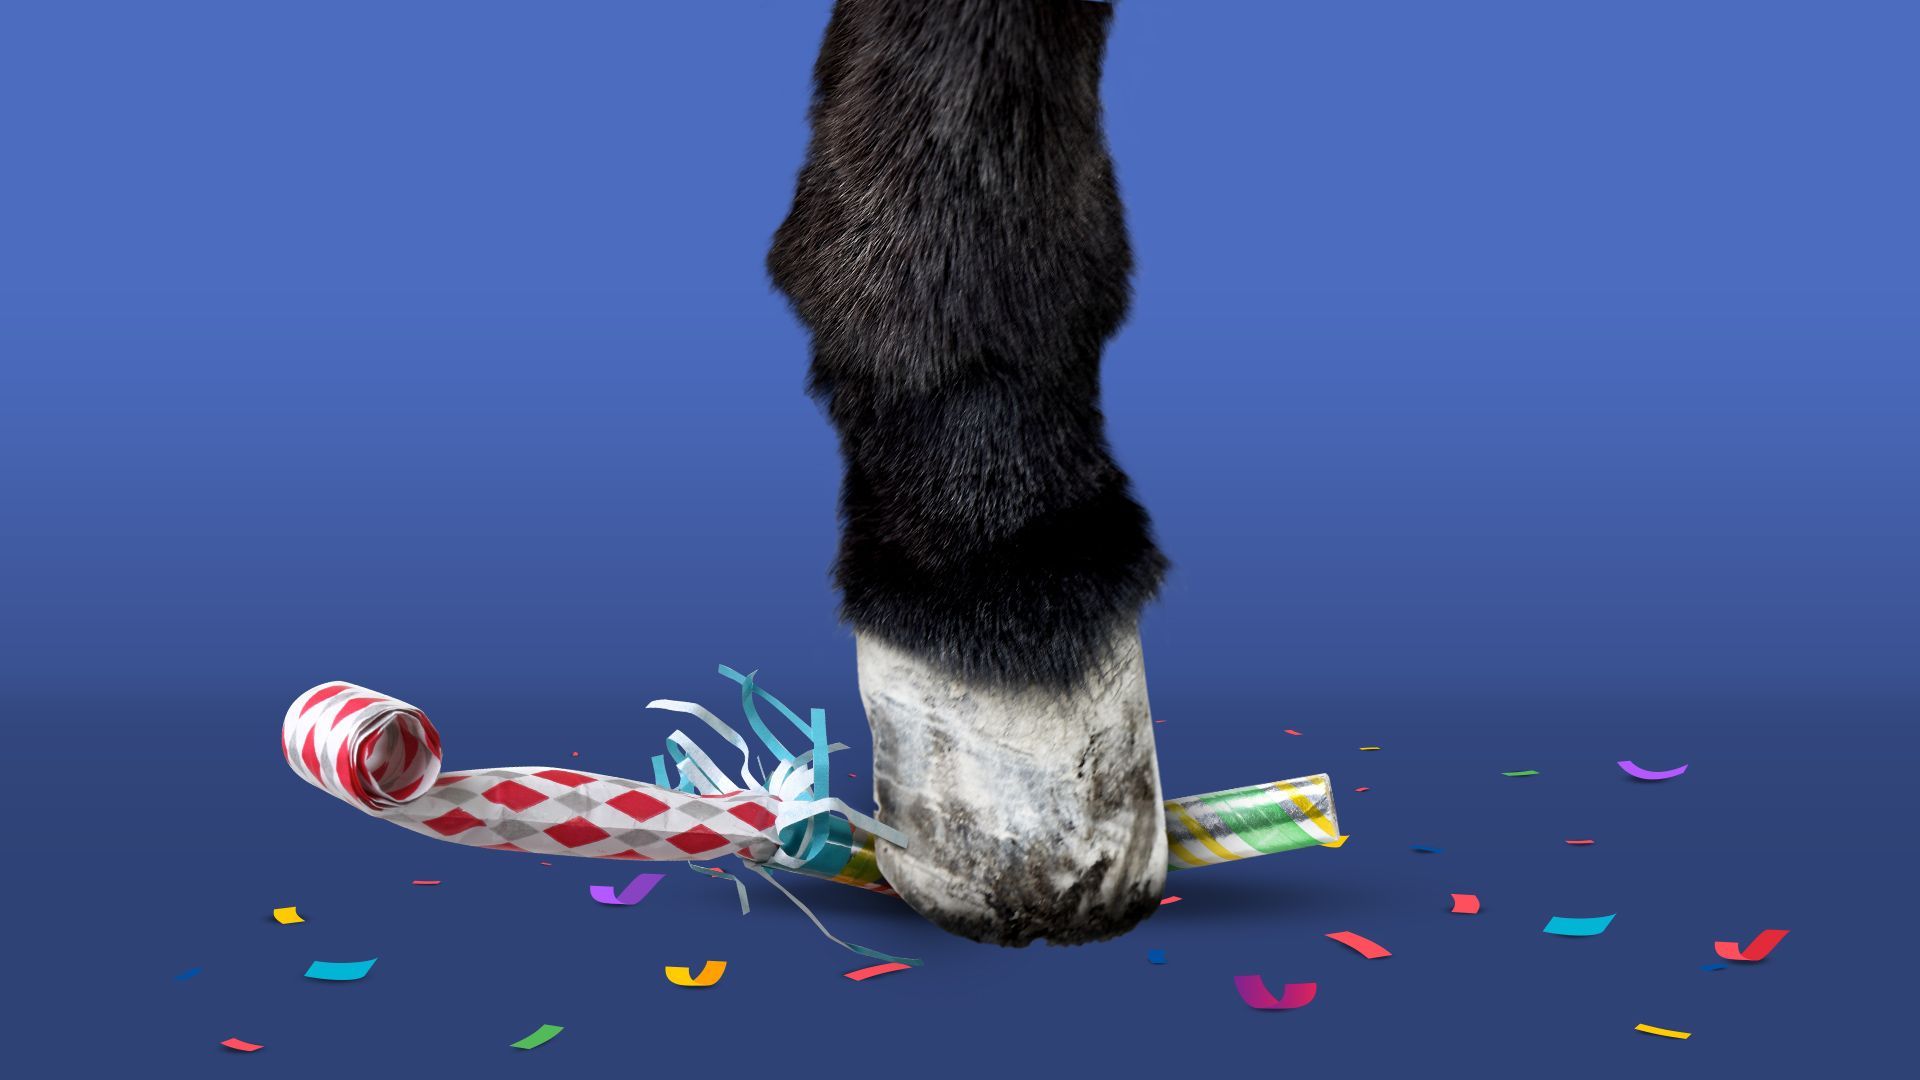 Illustration of a donkey hoof smashing a party horn. 